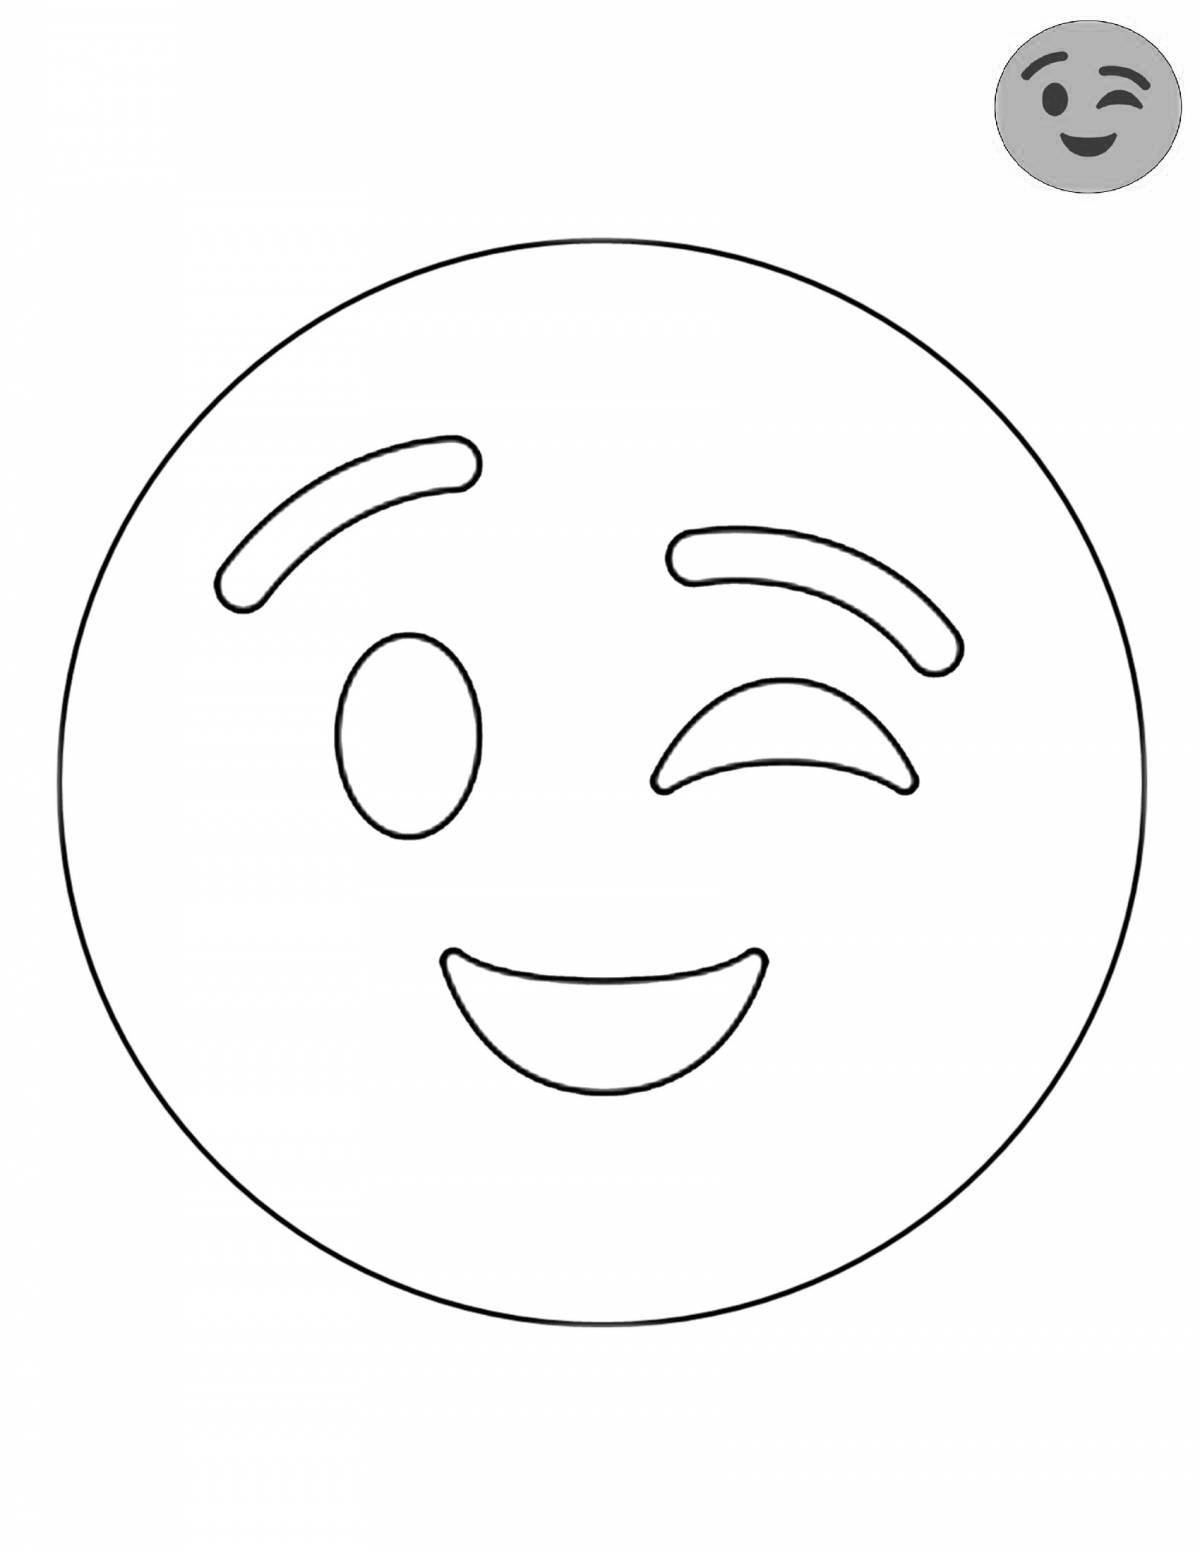 Emoji live coloring page